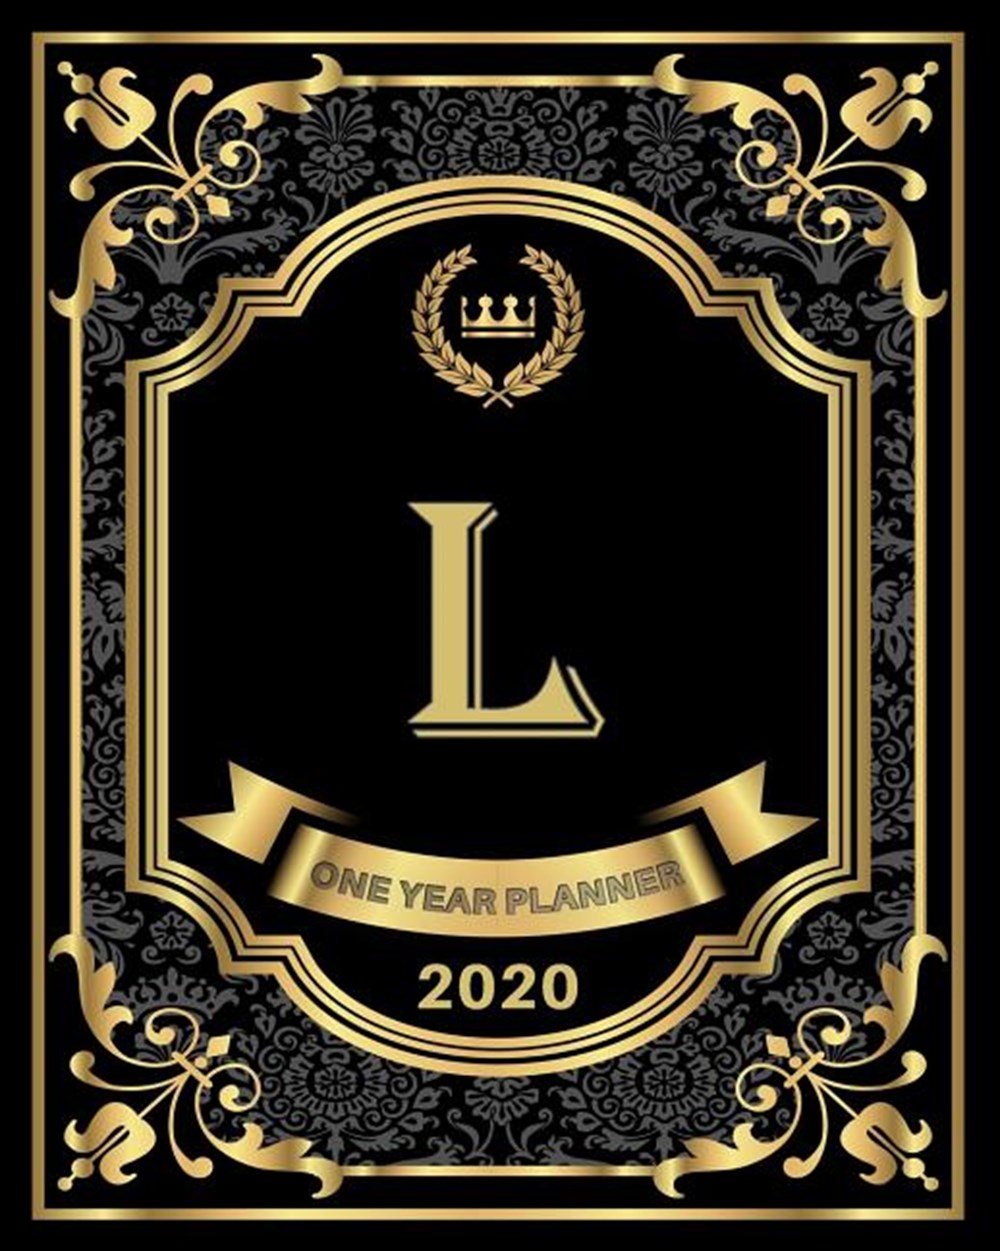 L - 2020 One Year Planner Elegant Black and Gold Monogram Initials - Pretty Calendar Organizer - One